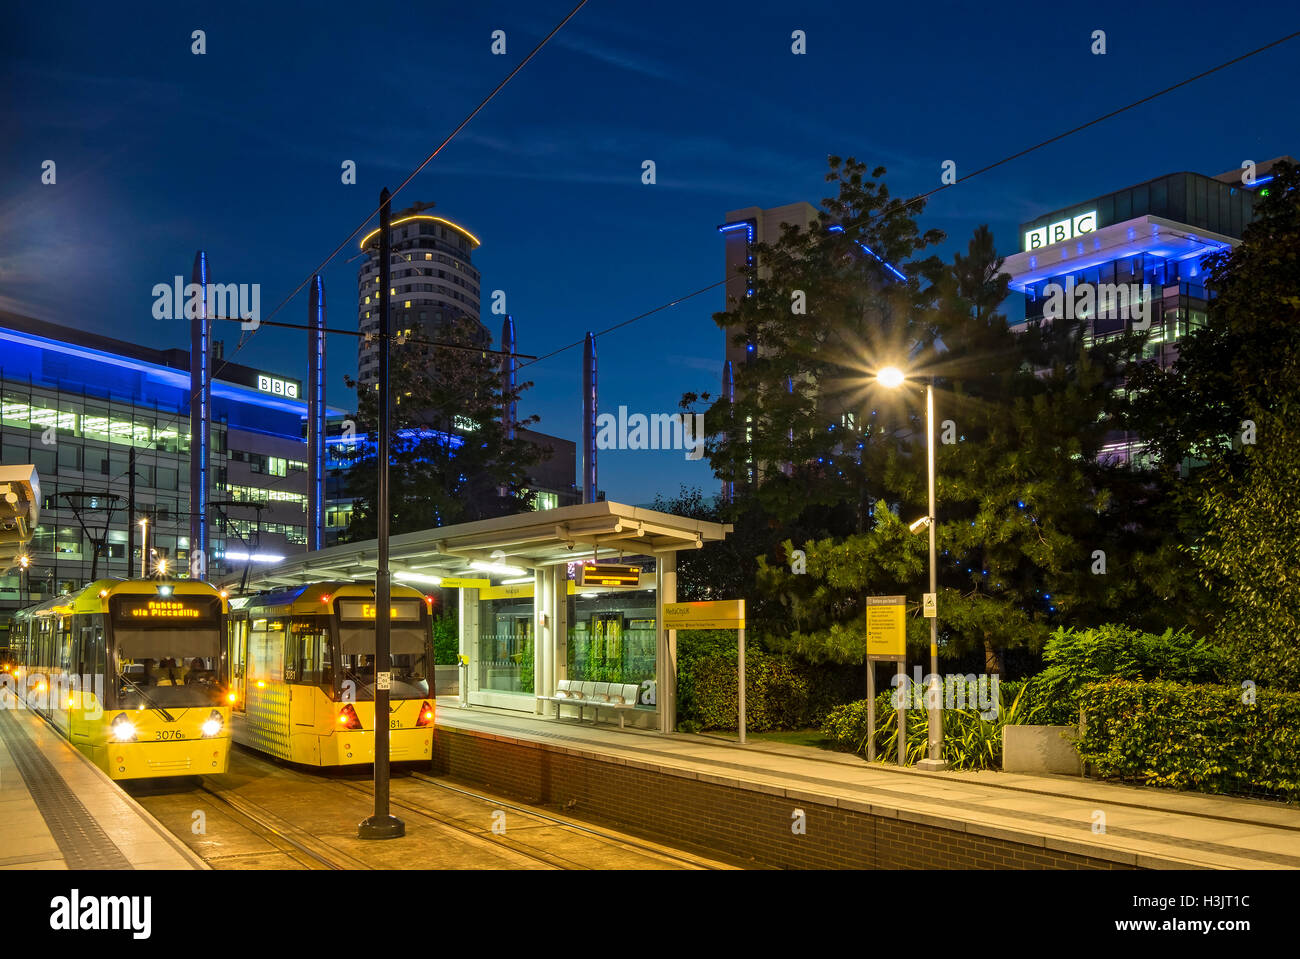 Les tramways à Manchester MediacityUK Tram Station, MediacityUK, Salford Quays, Manchester, Angleterre, RU Banque D'Images